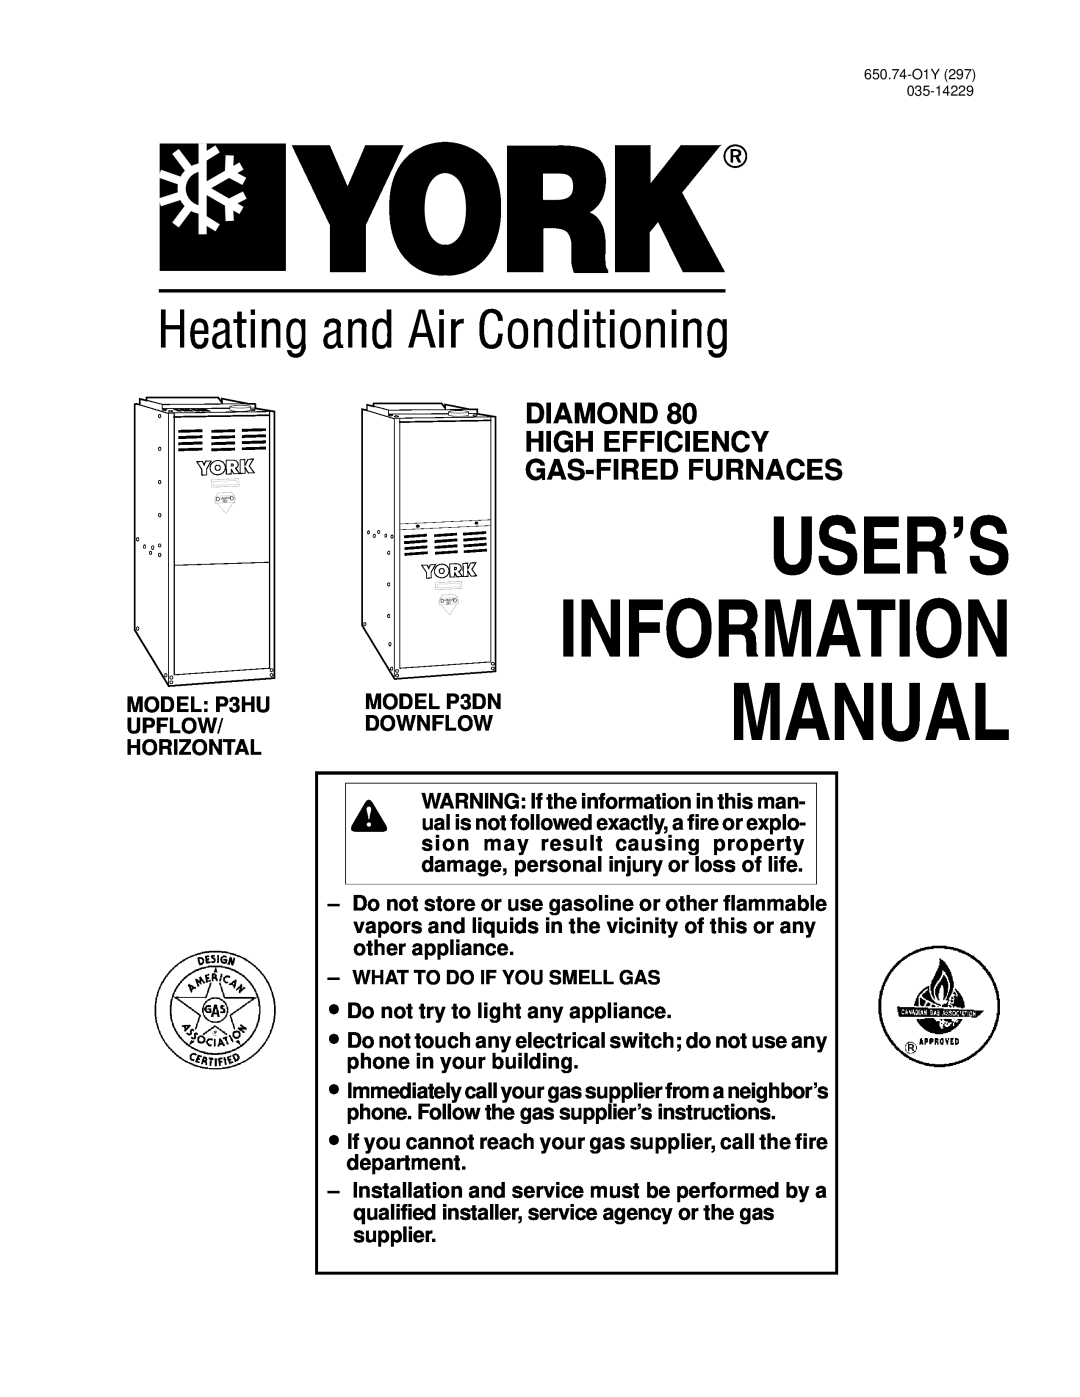 York P3DN, P3HU manual User’S Information Manual, Diamond High Efficiency Gas-Firedfurnaces 